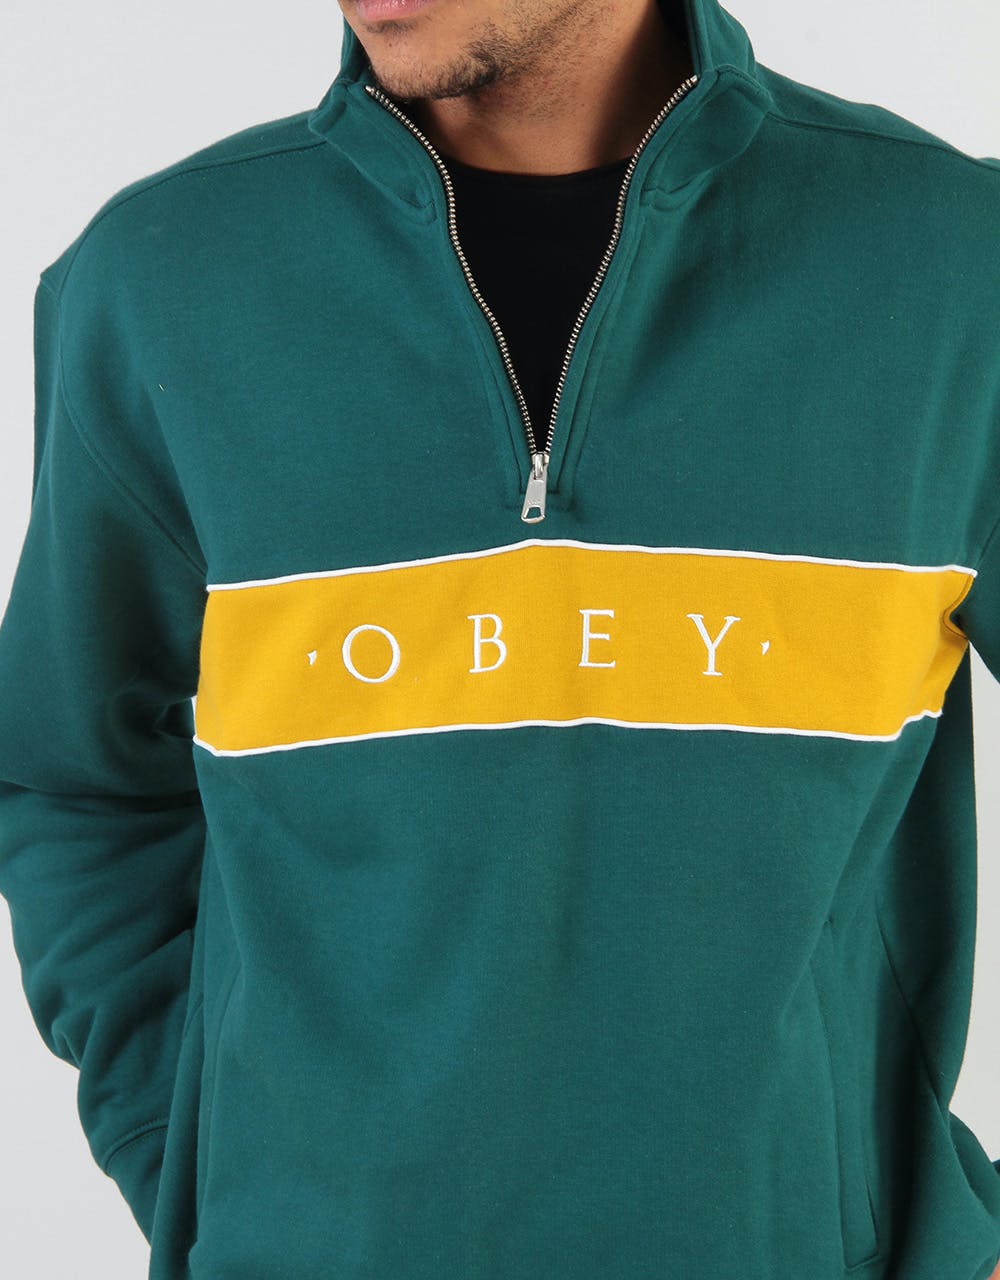 Obey Deal Mock Neck Track Top Sweatshirt - Deep Teal Multi